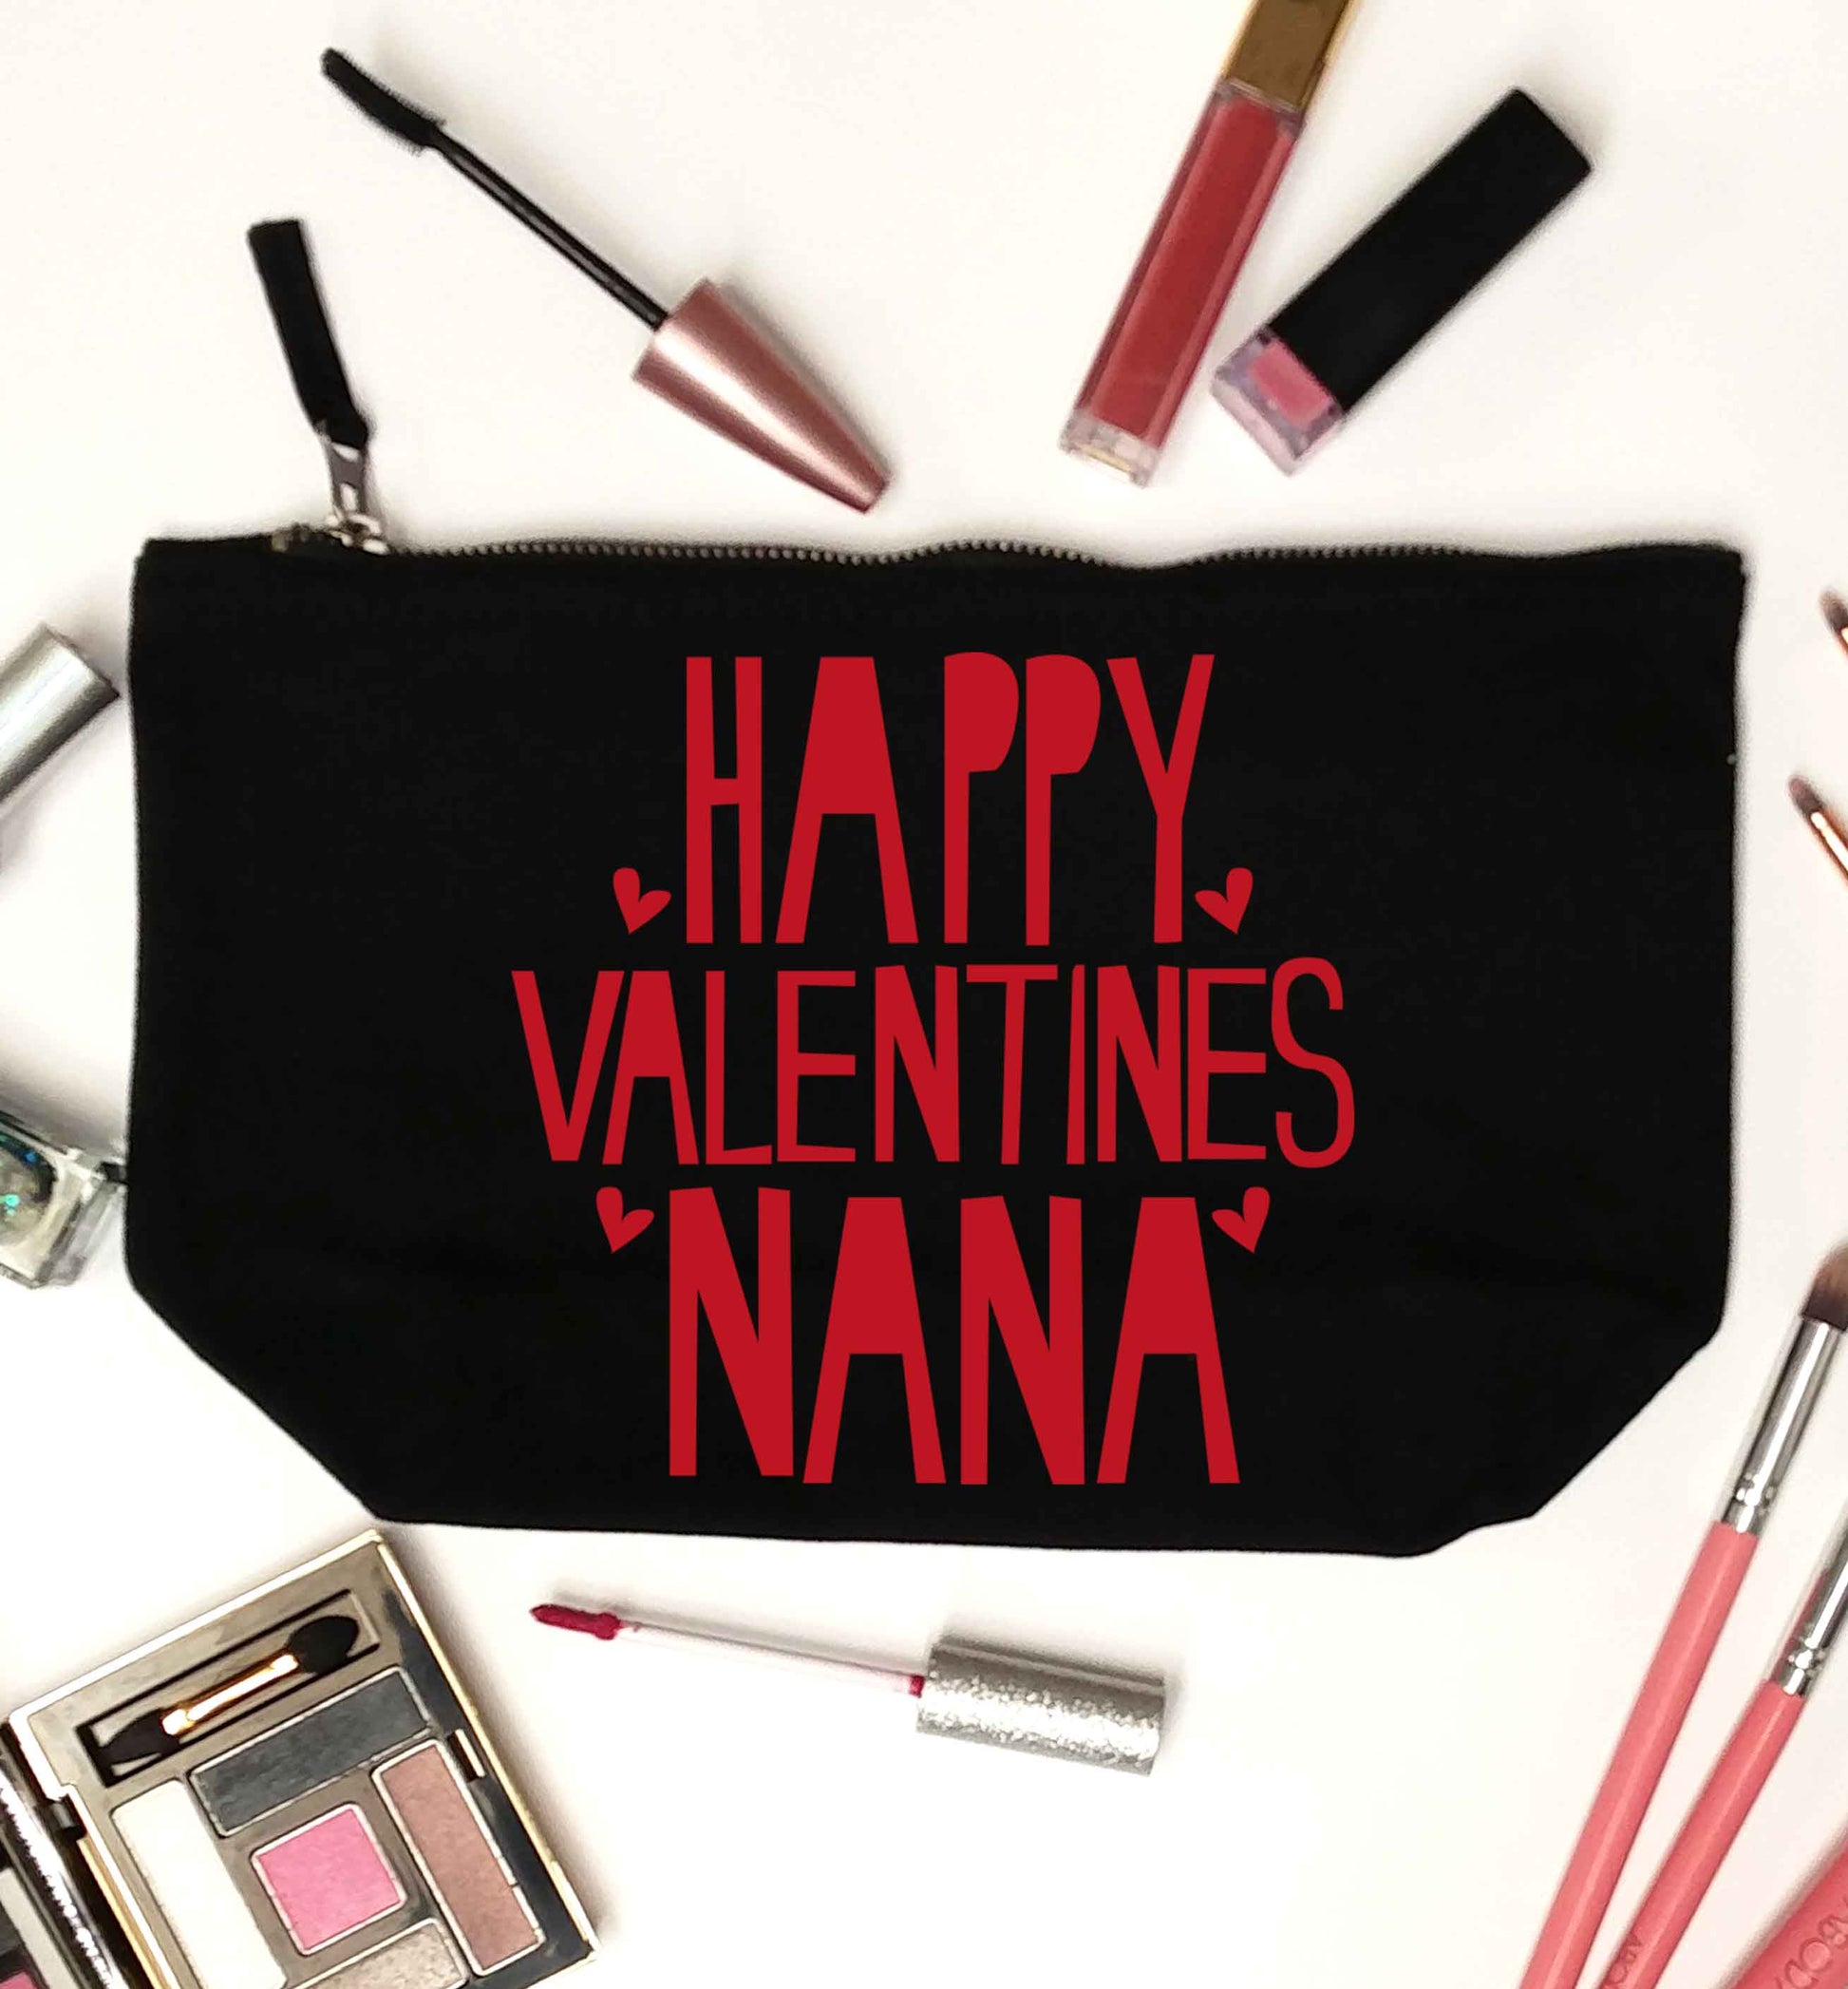 Happy valentines nana black makeup bag